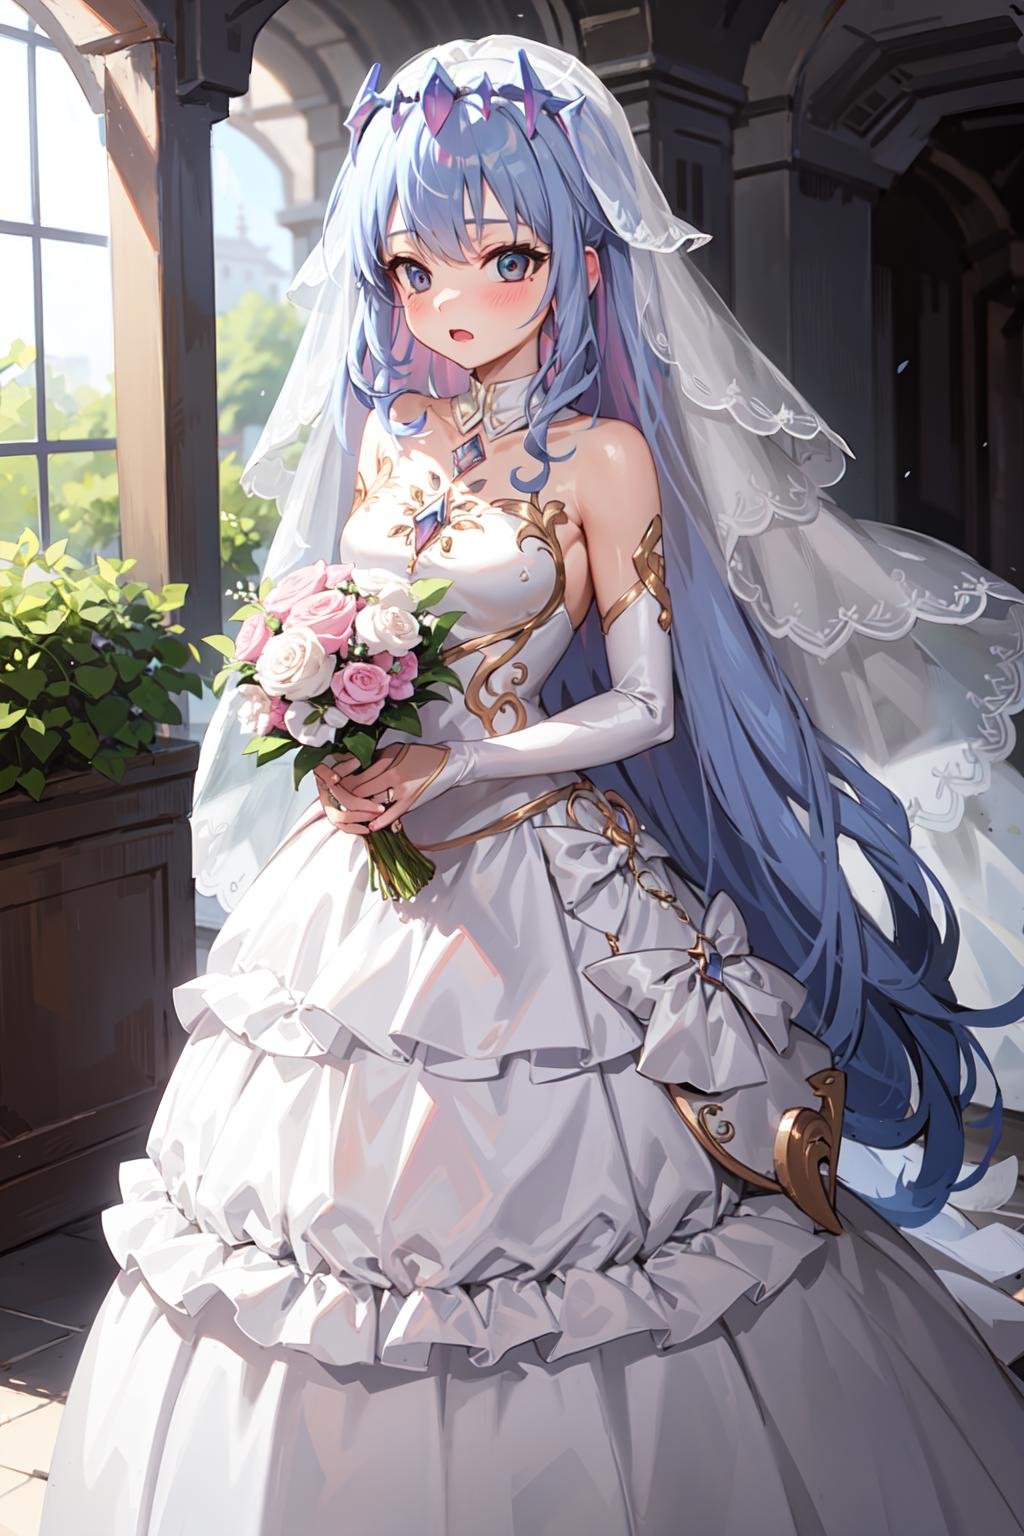 a girl, ((wedding dress)) <lora:KitsuneAi-KosekiBijou-LoCon32-V0_4:0.6> 